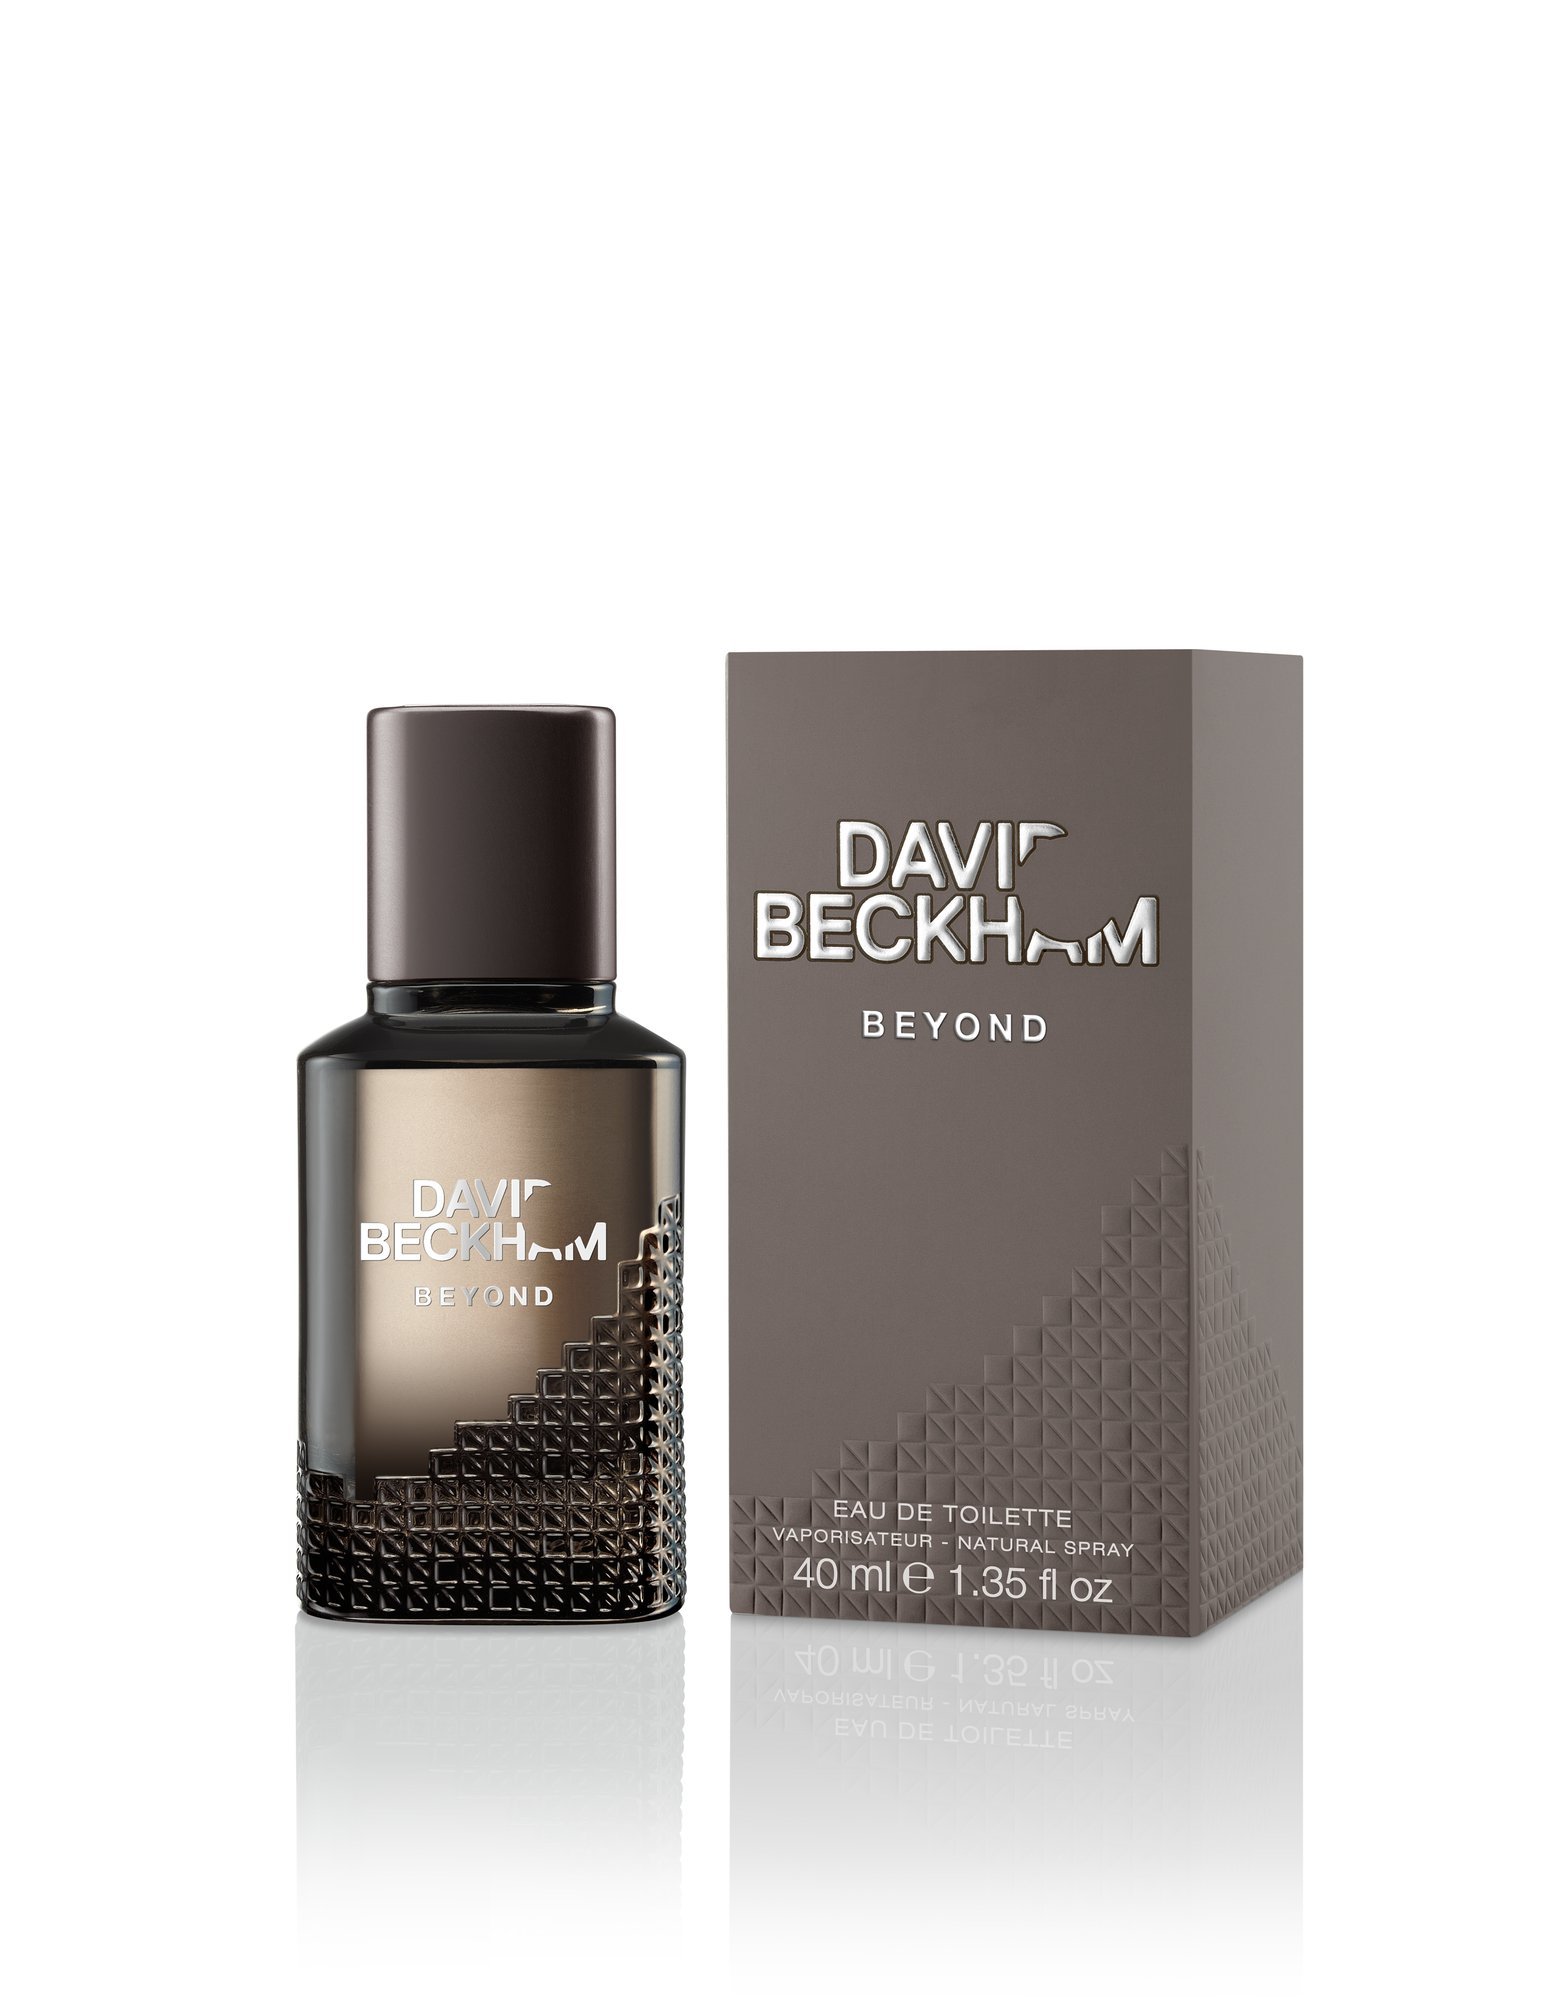 David Beckham Beyond for Men 1.35 oz Eau de Toilette Spray - image 3 of 3